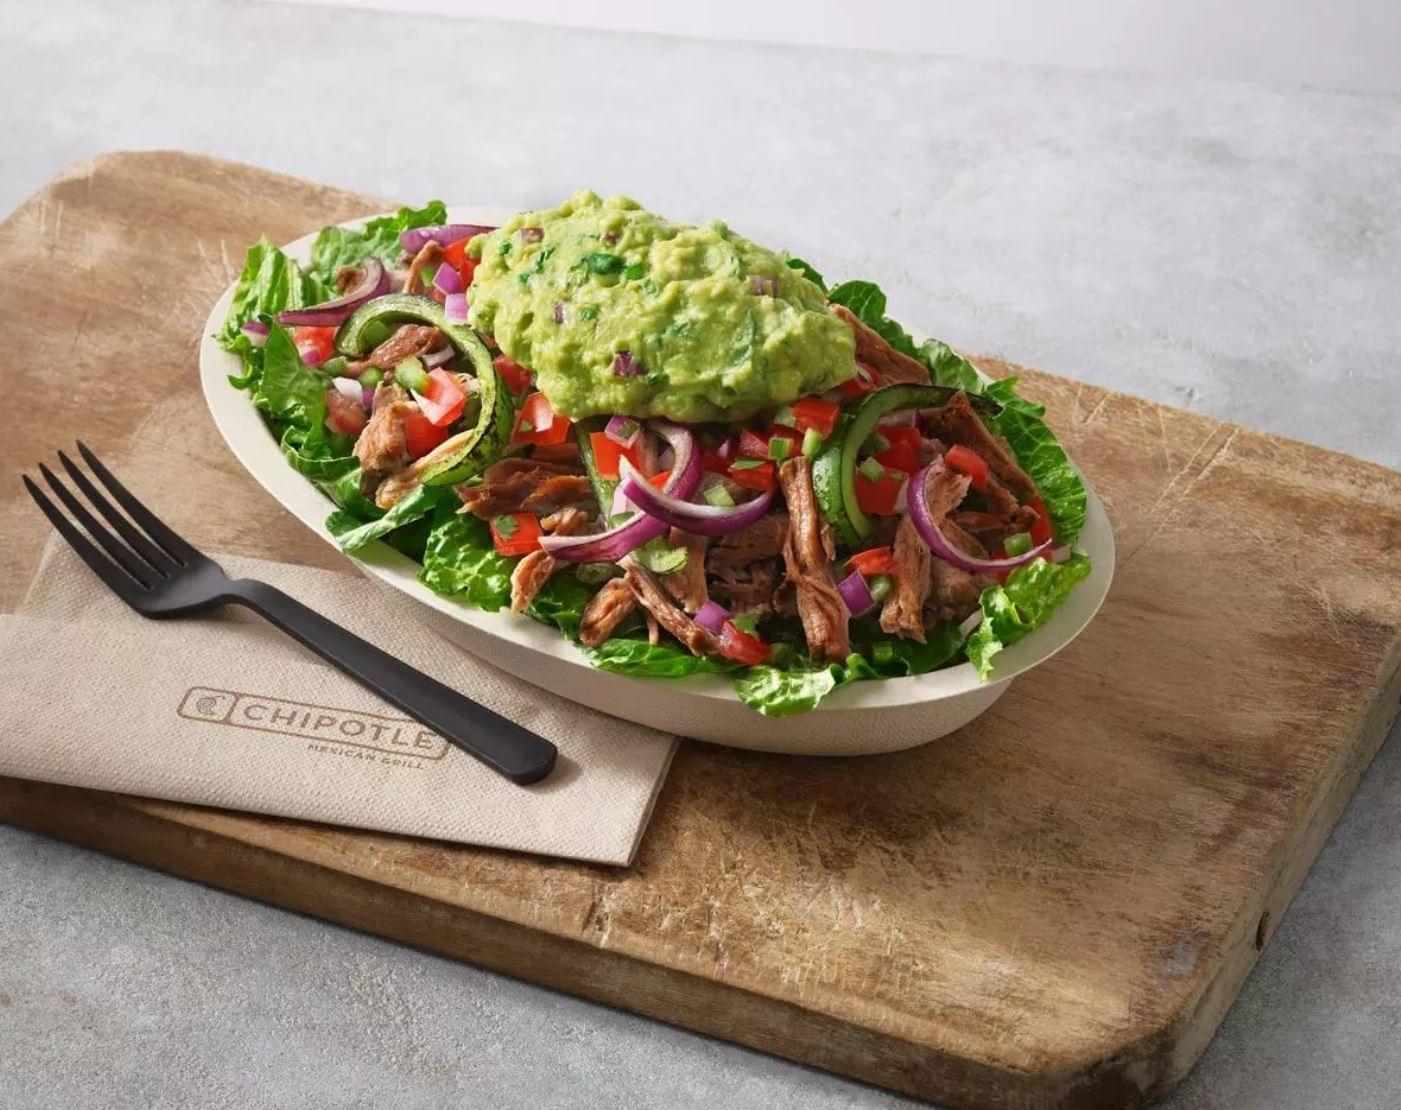 Chipotle Steak Salad Nutrition Facts